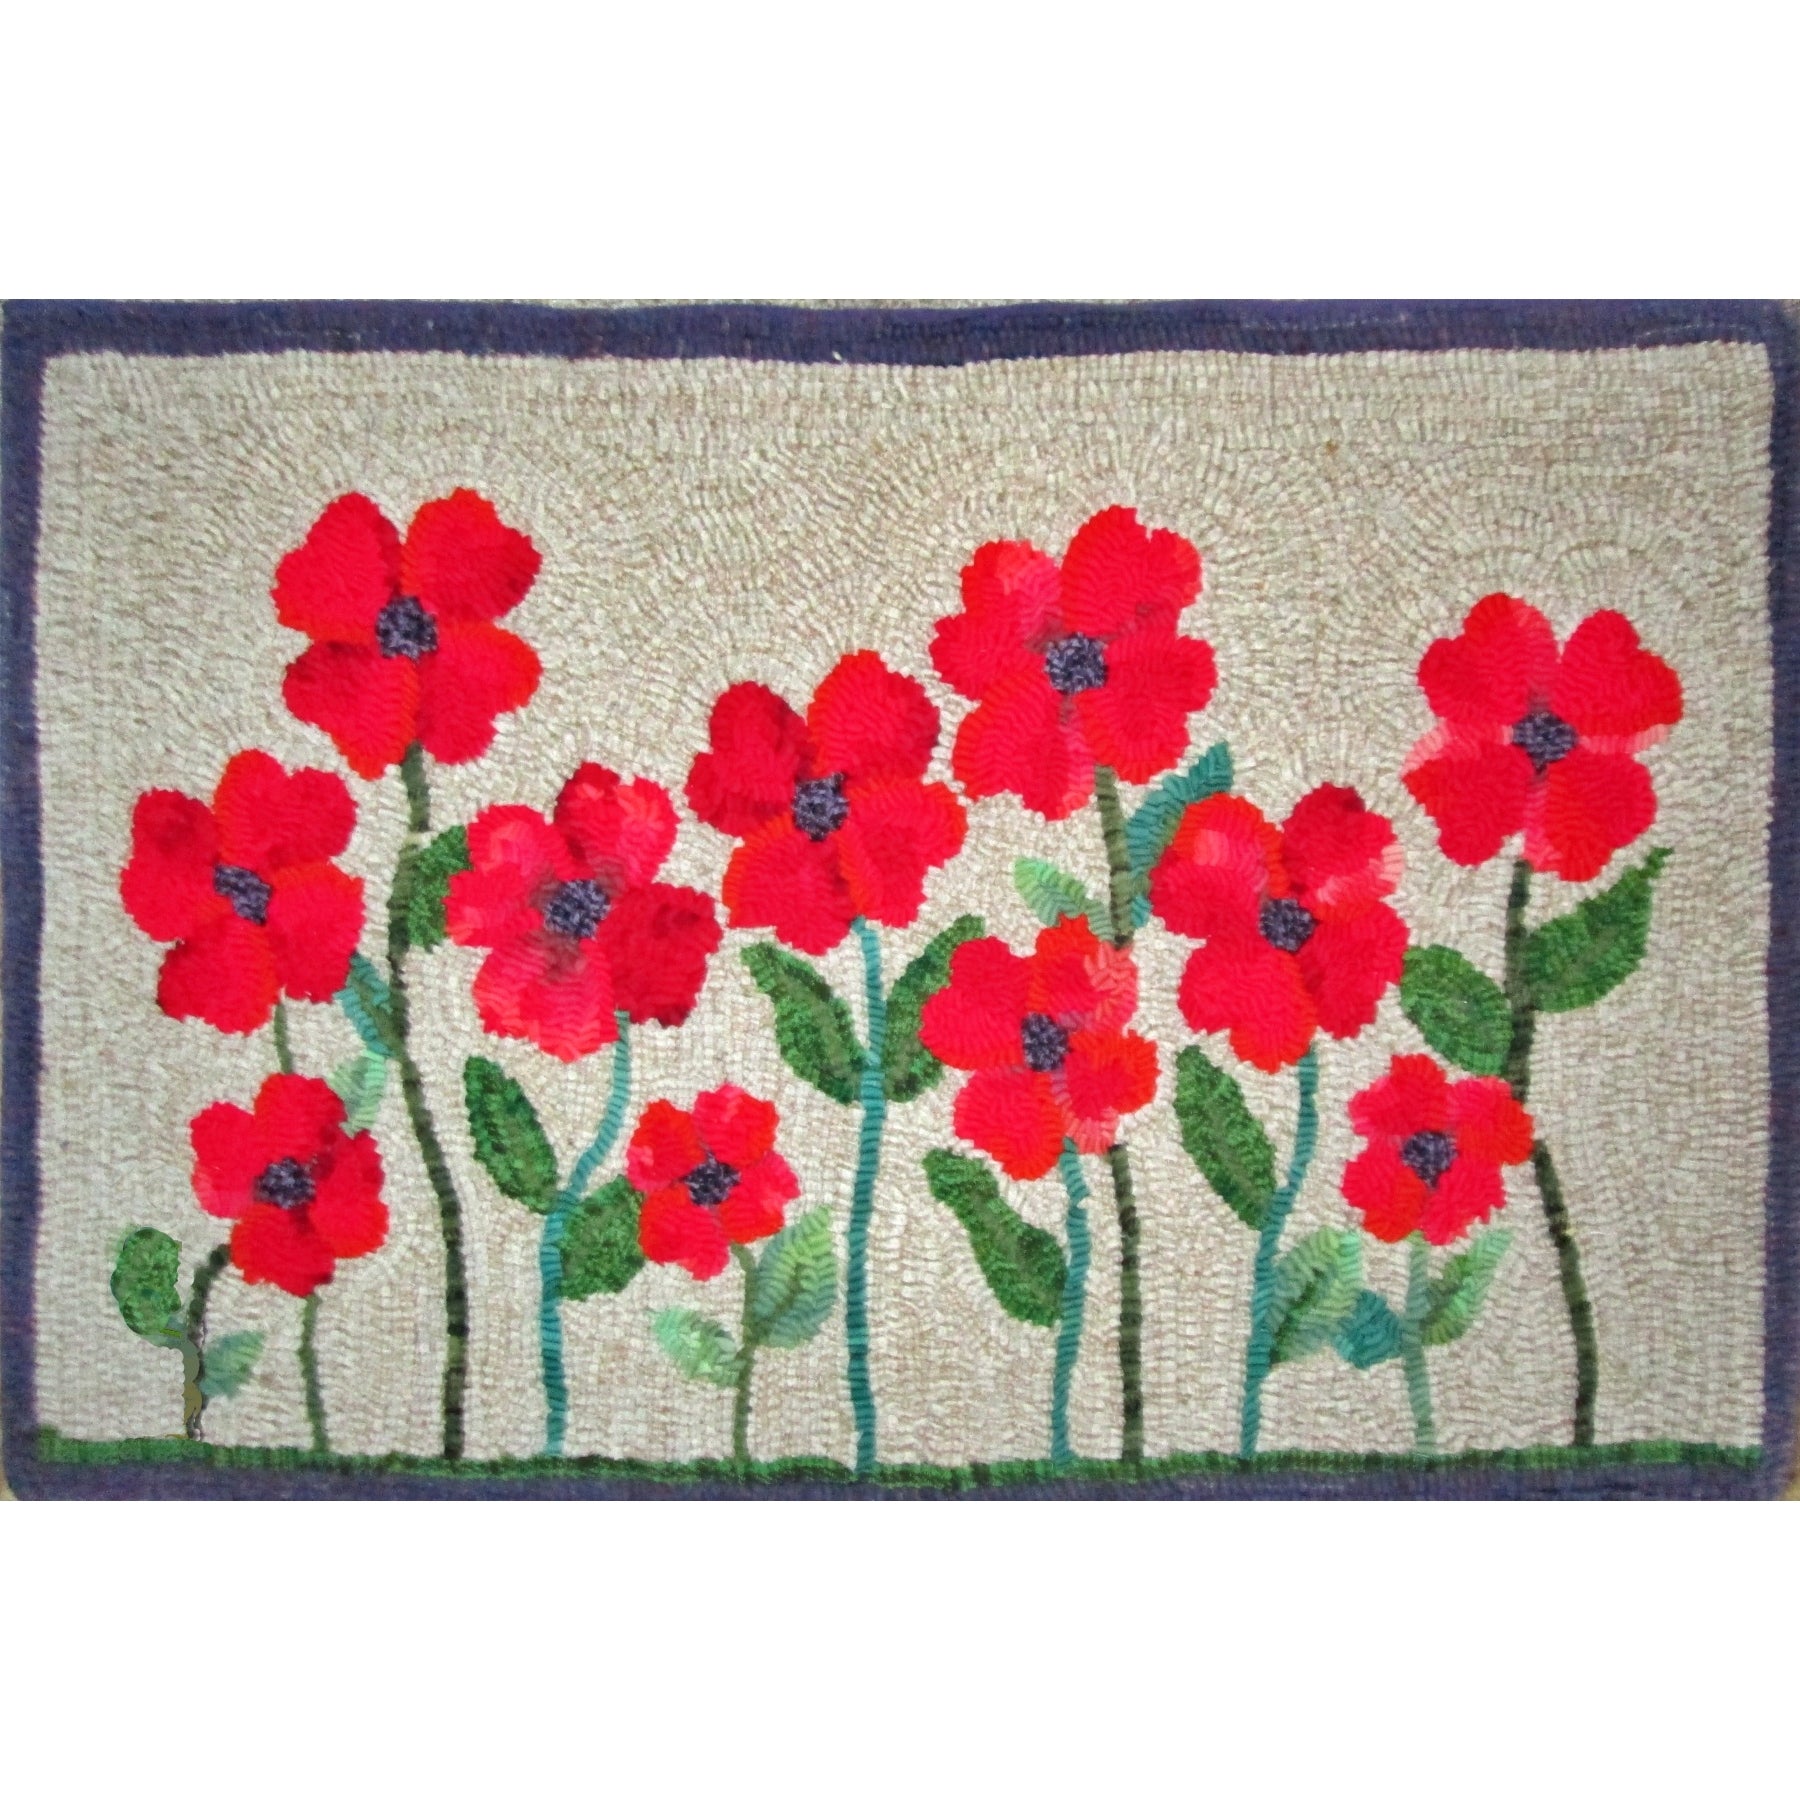 Pretty Pretty Flowers, rug hooked by Connie Bradley